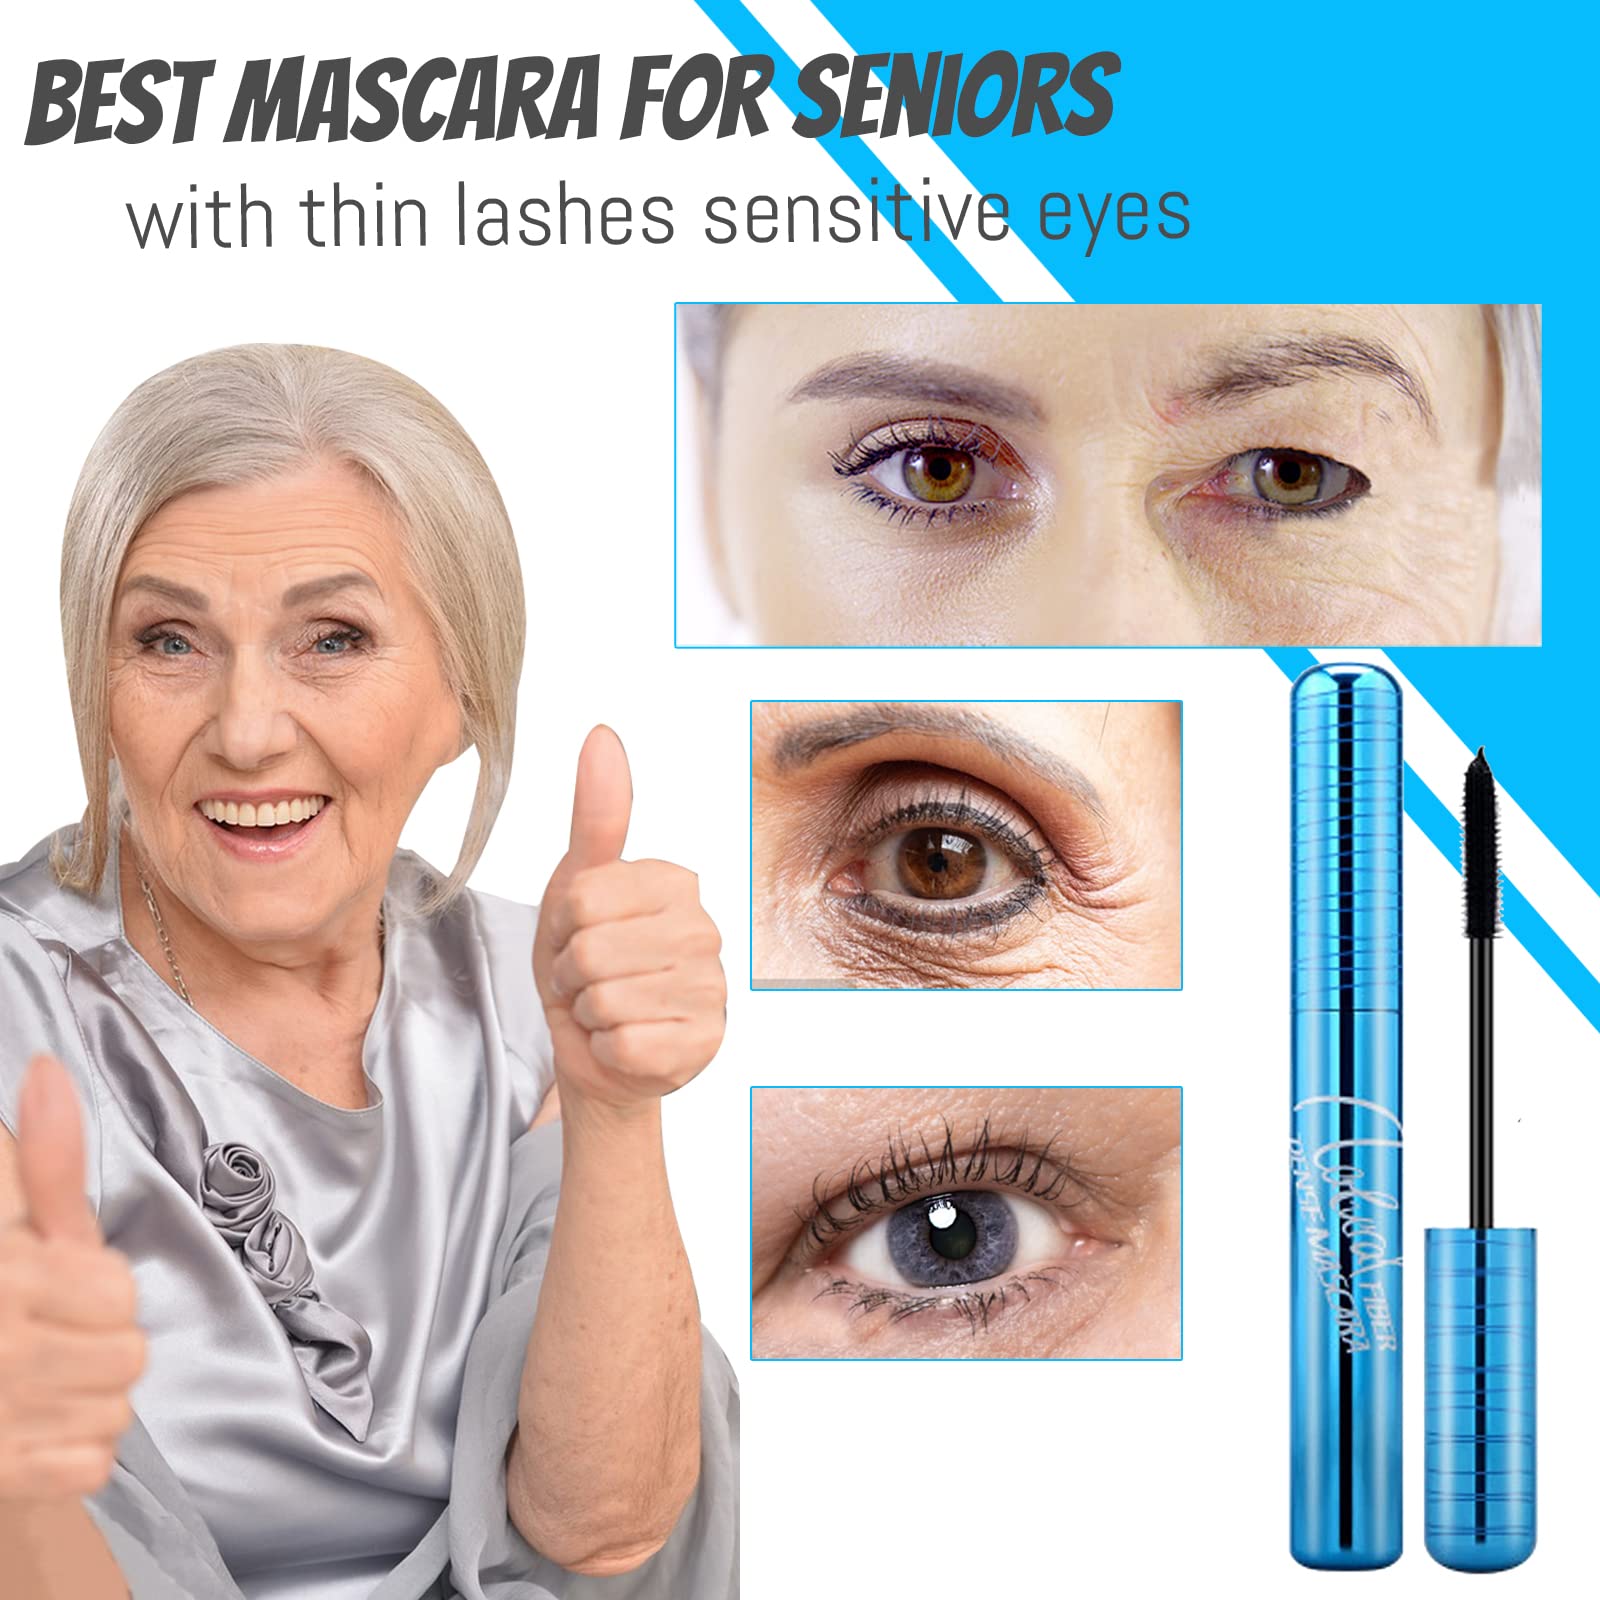 Mascara for Older Women 60 Plus, Mascara for Seniors with Thinning Lashes, Hypoallergenic Mascara Sensitive Eyes, Mascara Black Volume and Length, Black Mascara Waterproof Smudge Proof, Black (1pc)